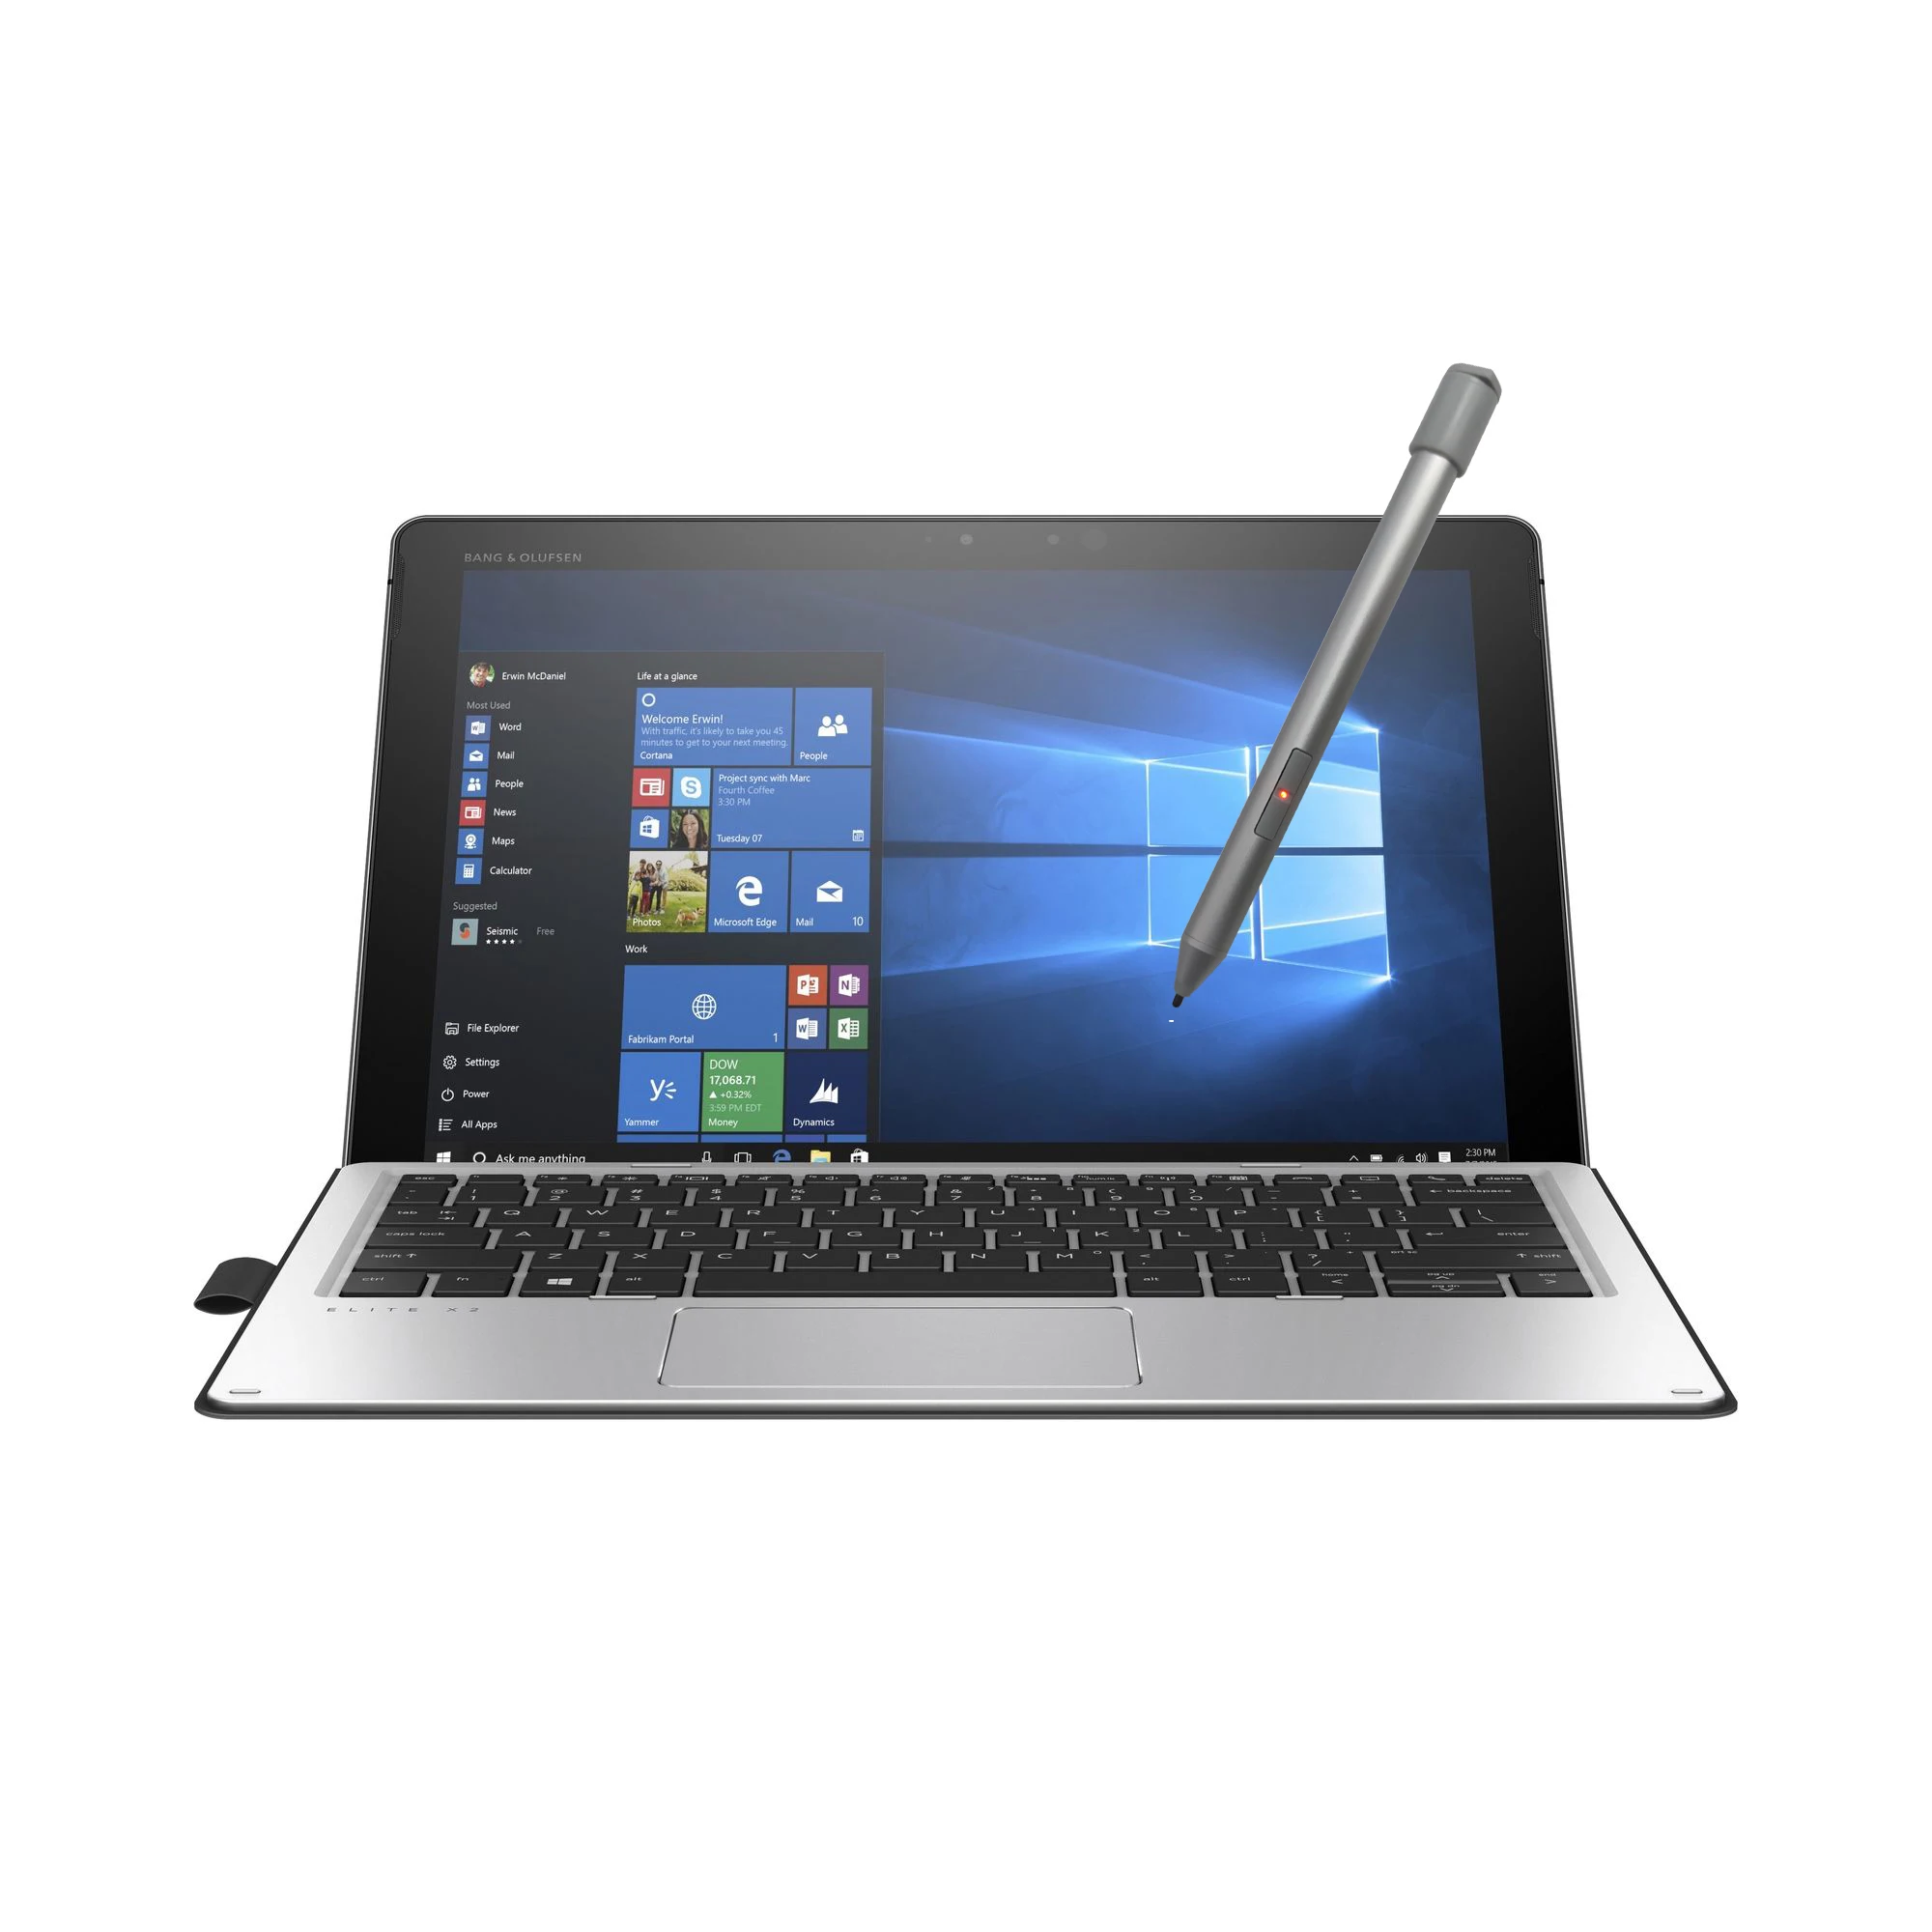 Active Touch Stylus Pen For HP EliteBook x360 1020 1030 1040 G2 G3 G4 G5 G6 G7 Elite x2 1012 1013 Tablet Pen images - 6